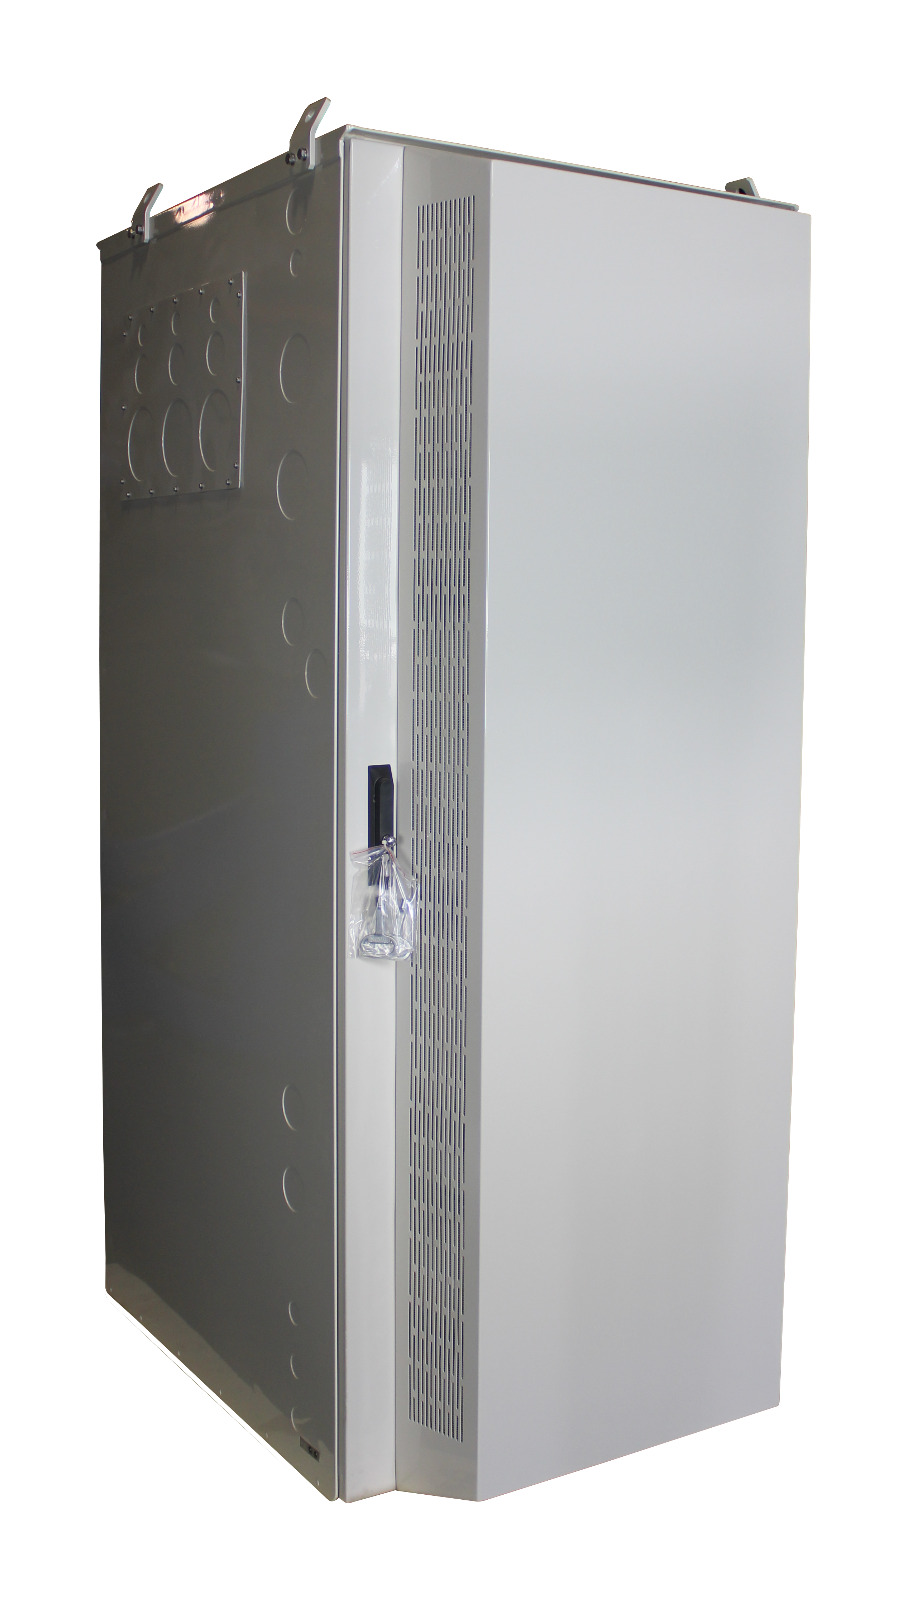 New Delta Equipment & Power Cabinet ESOA600-HCU01